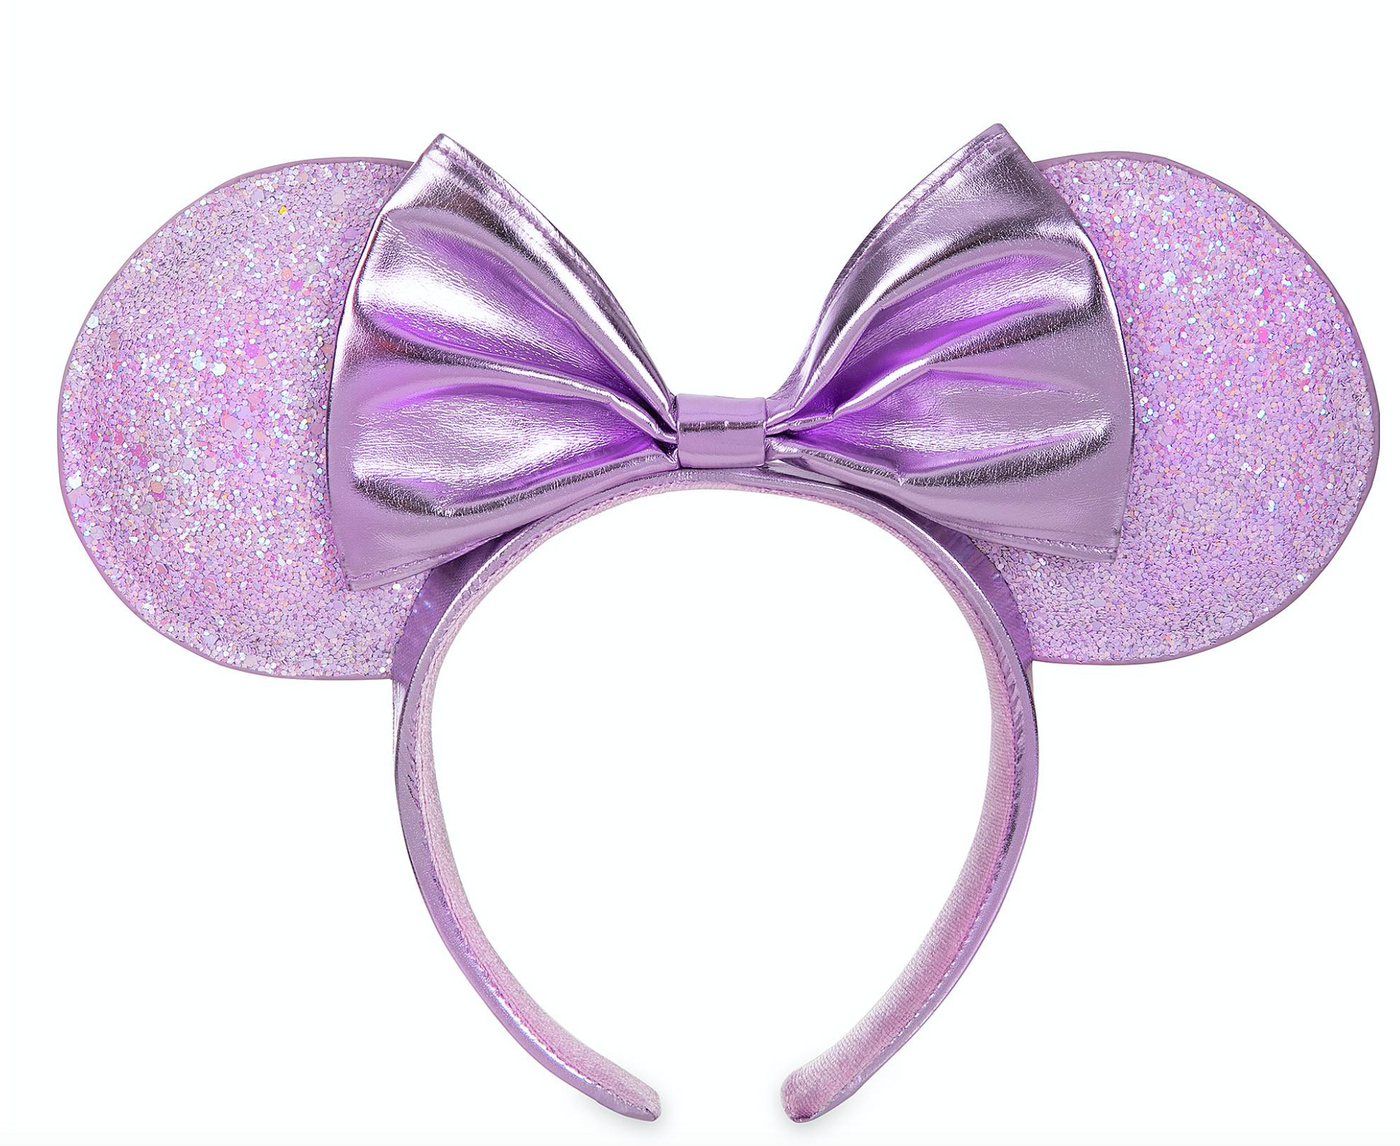 Disney Parks 2020 Epcot Tomorrowland Minnie Mouse Ear Headband New with Tags